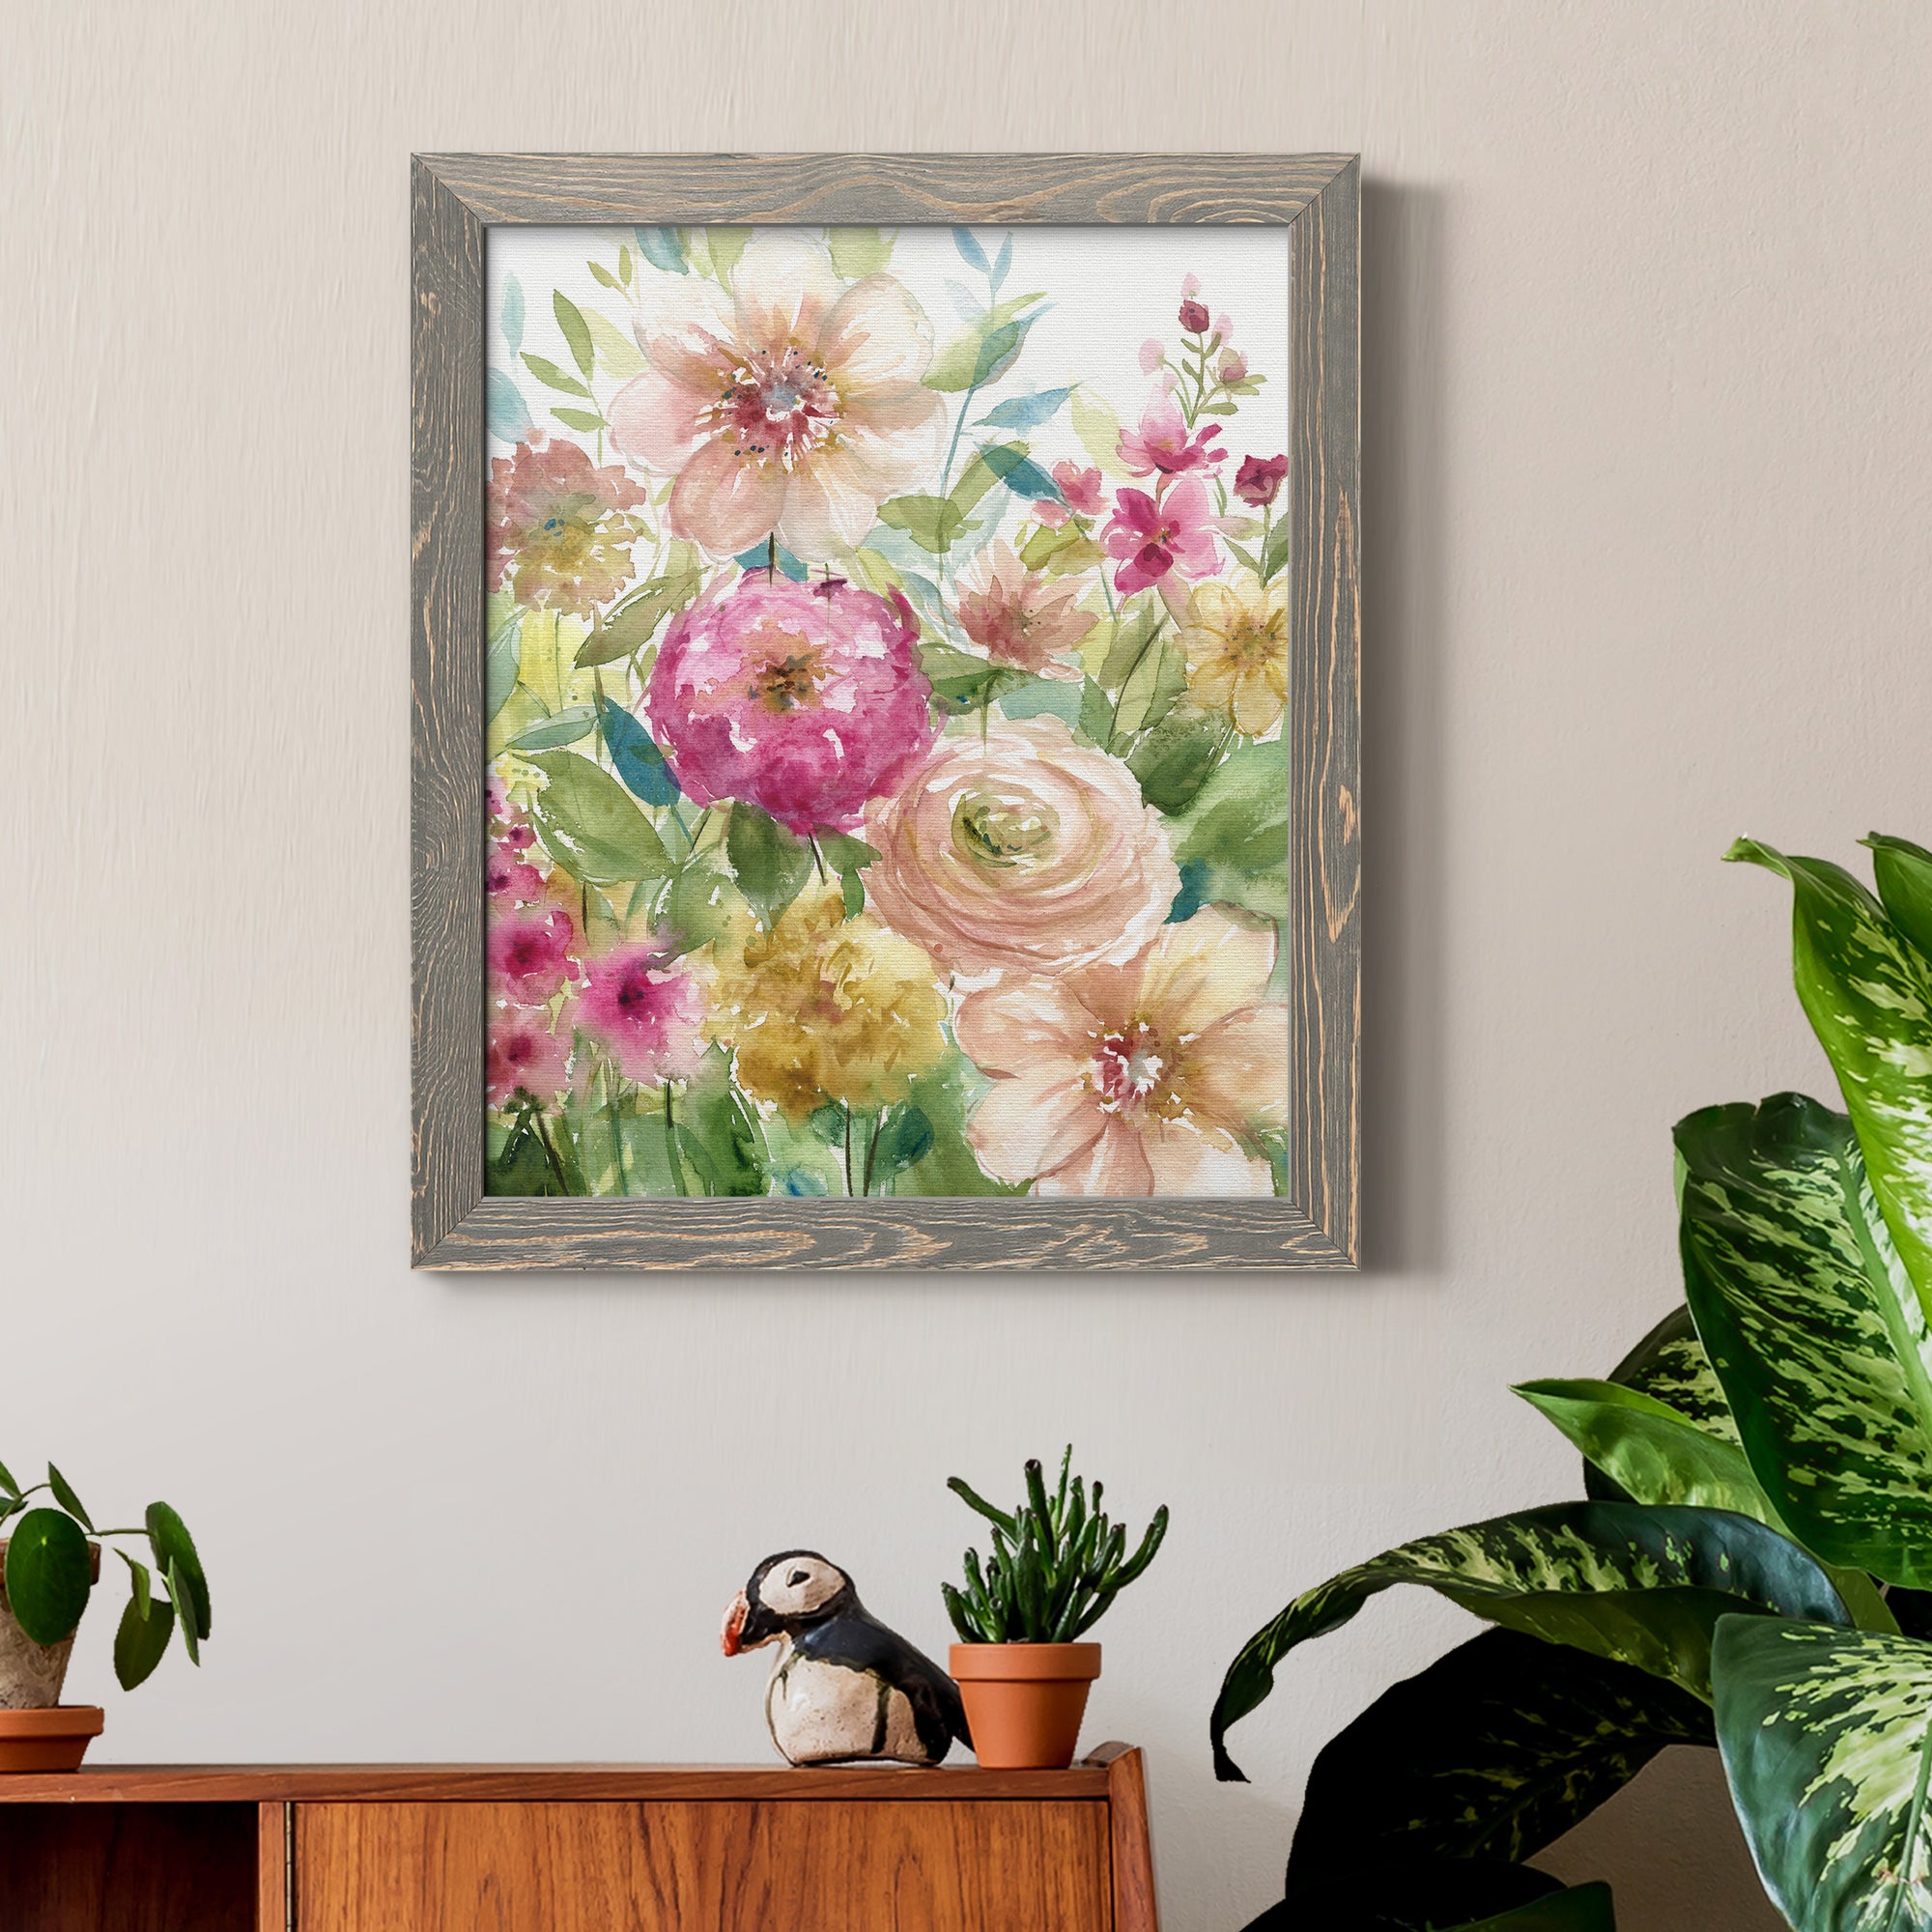 Jardin de Fleurs - Premium Canvas Framed in Barnwood - Ready to Hang